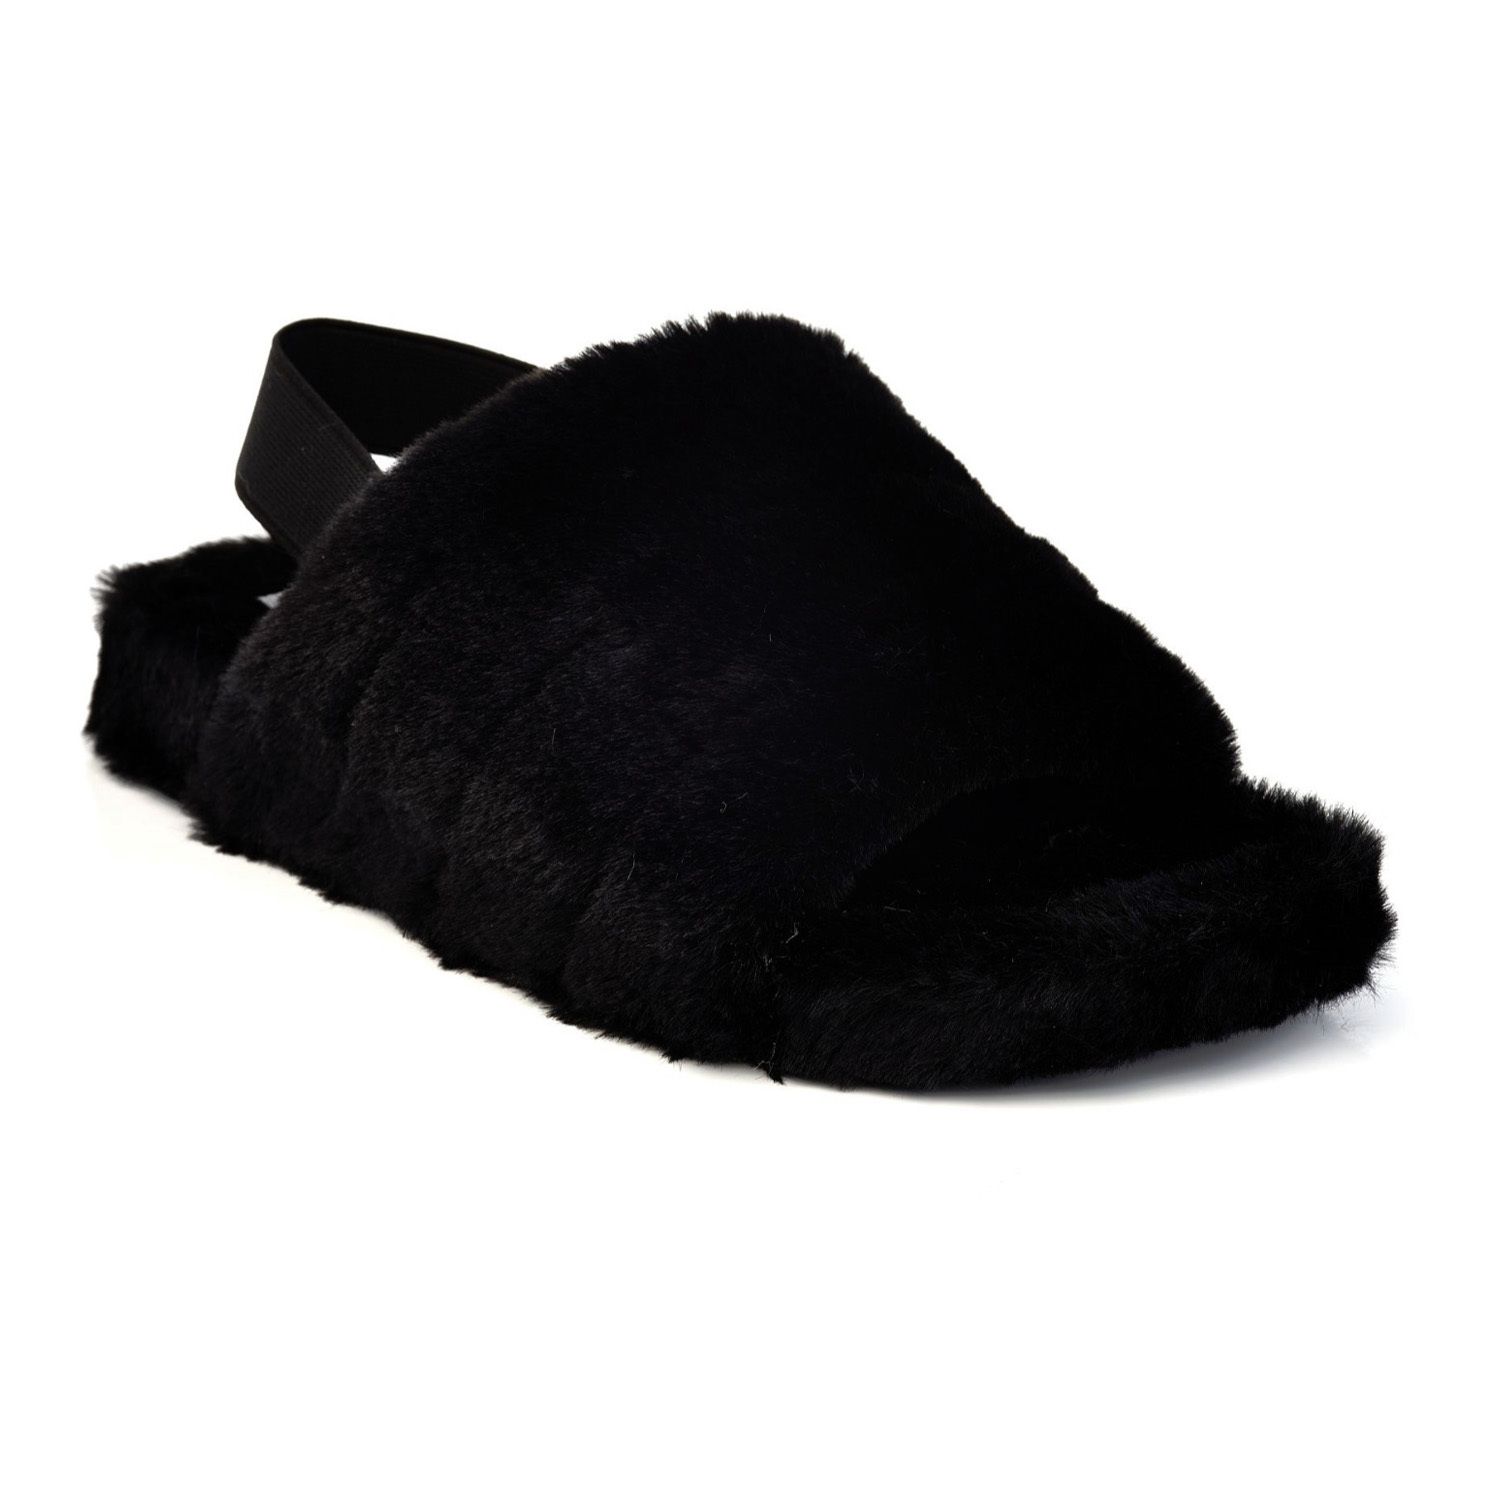 Image for Henry Ferrera Comoda 200 Women's Faux-Fur Slippers at Kohl's.